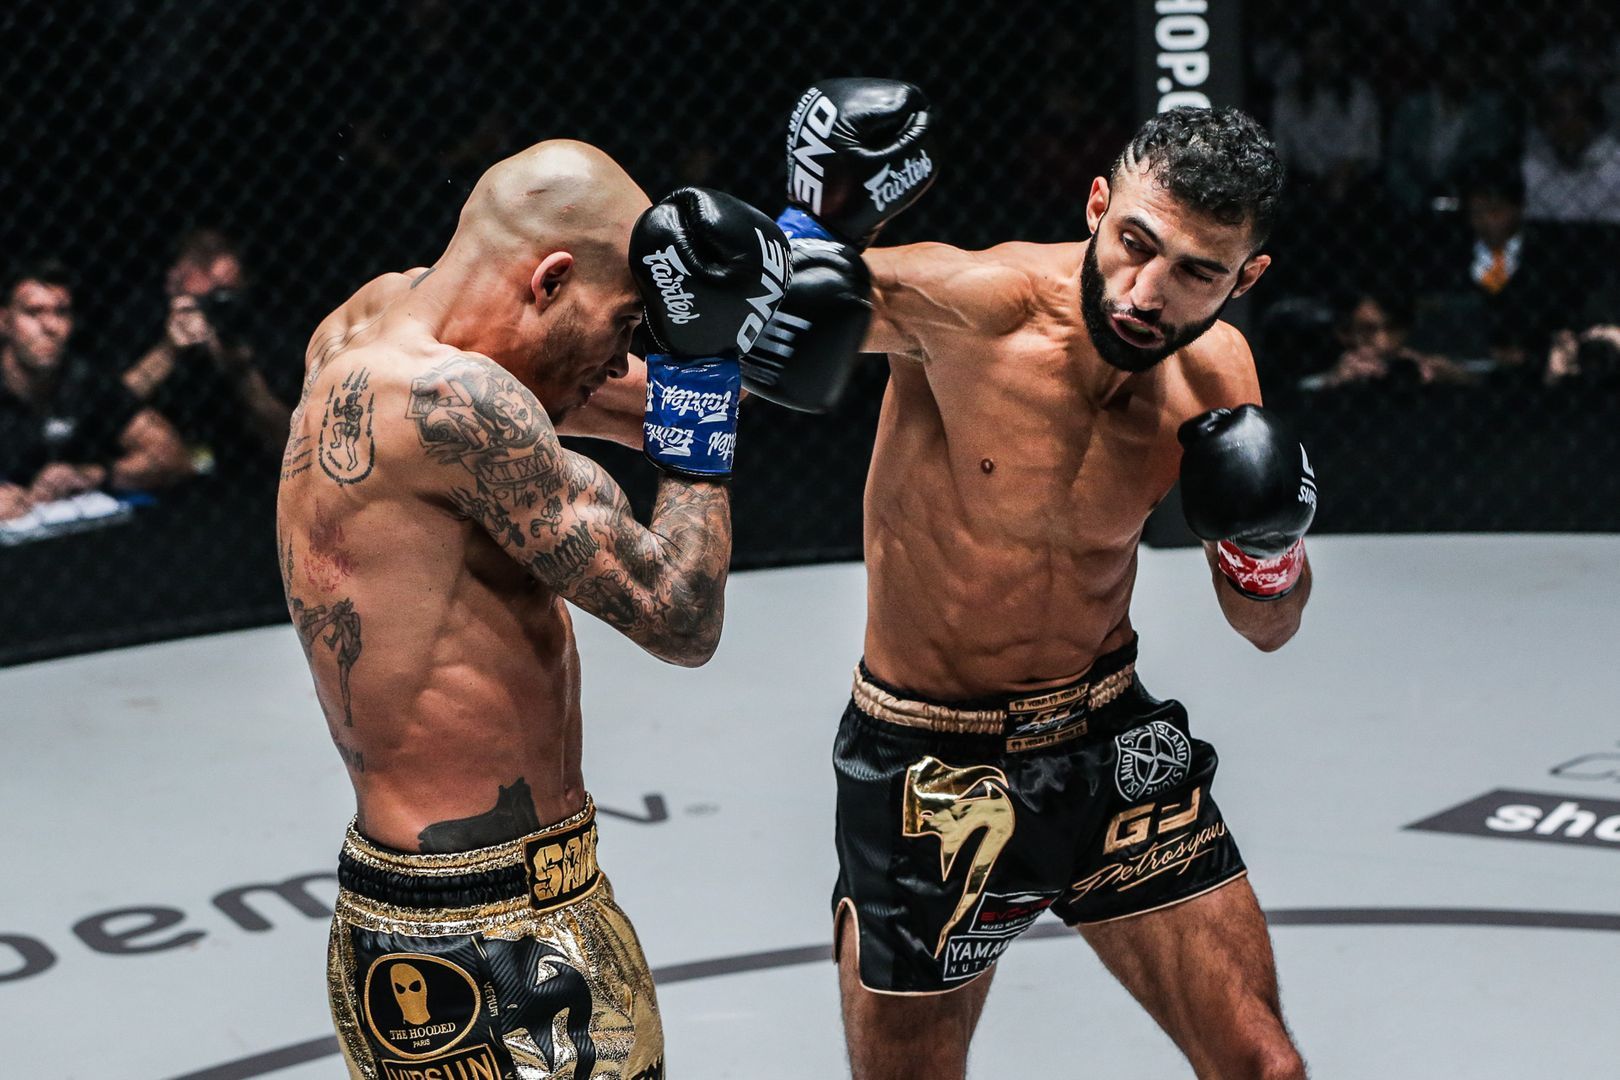 Kickboxing GOAT Giorgio Petrosyan punches Samy Sana